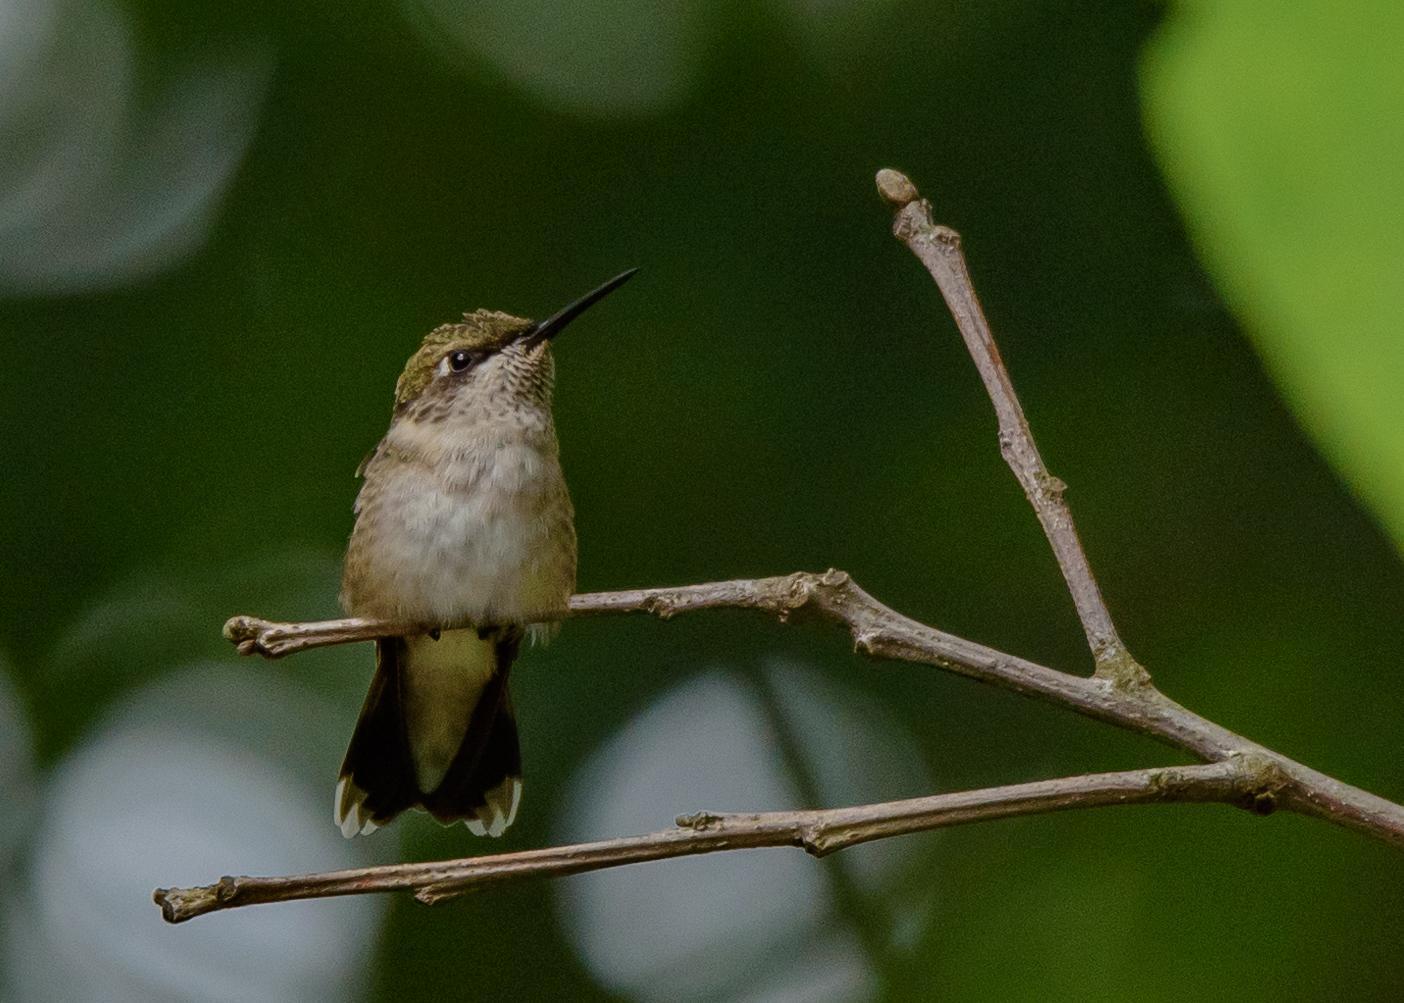 Ruby-throated Hummingbird Photo by Keshava Mysore